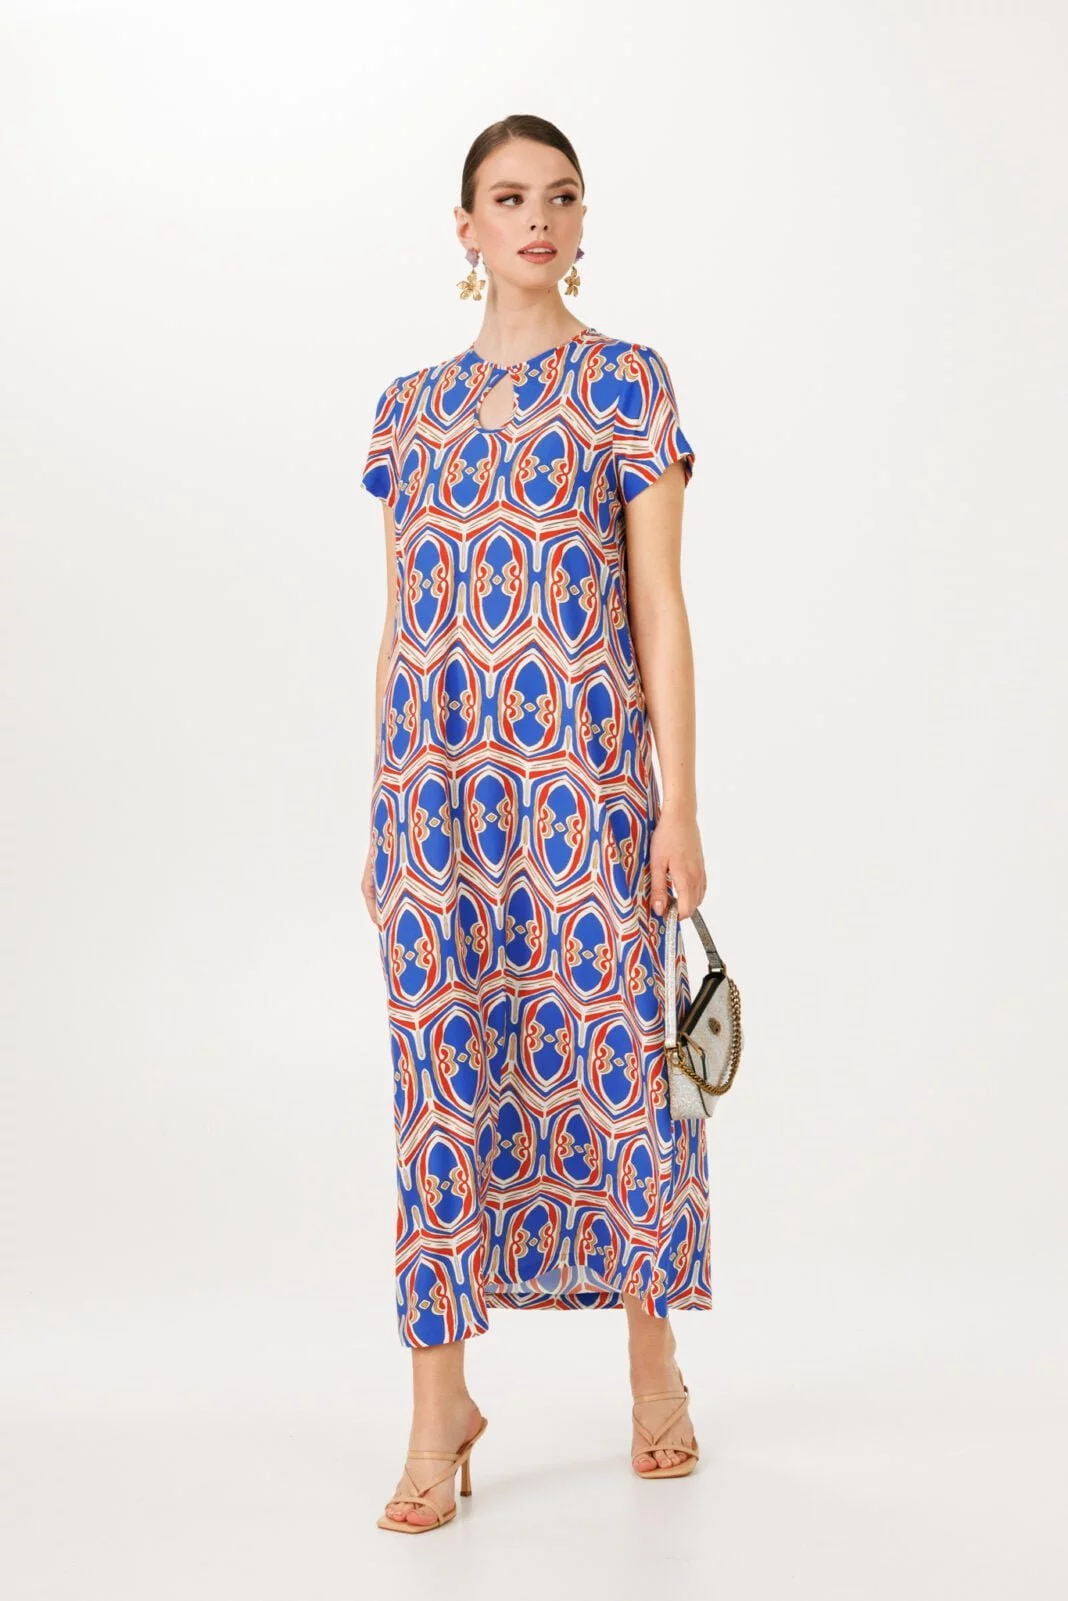 Vacation and Evening Moroccan Kaftan Dress - Exquisite Maxi Length Design